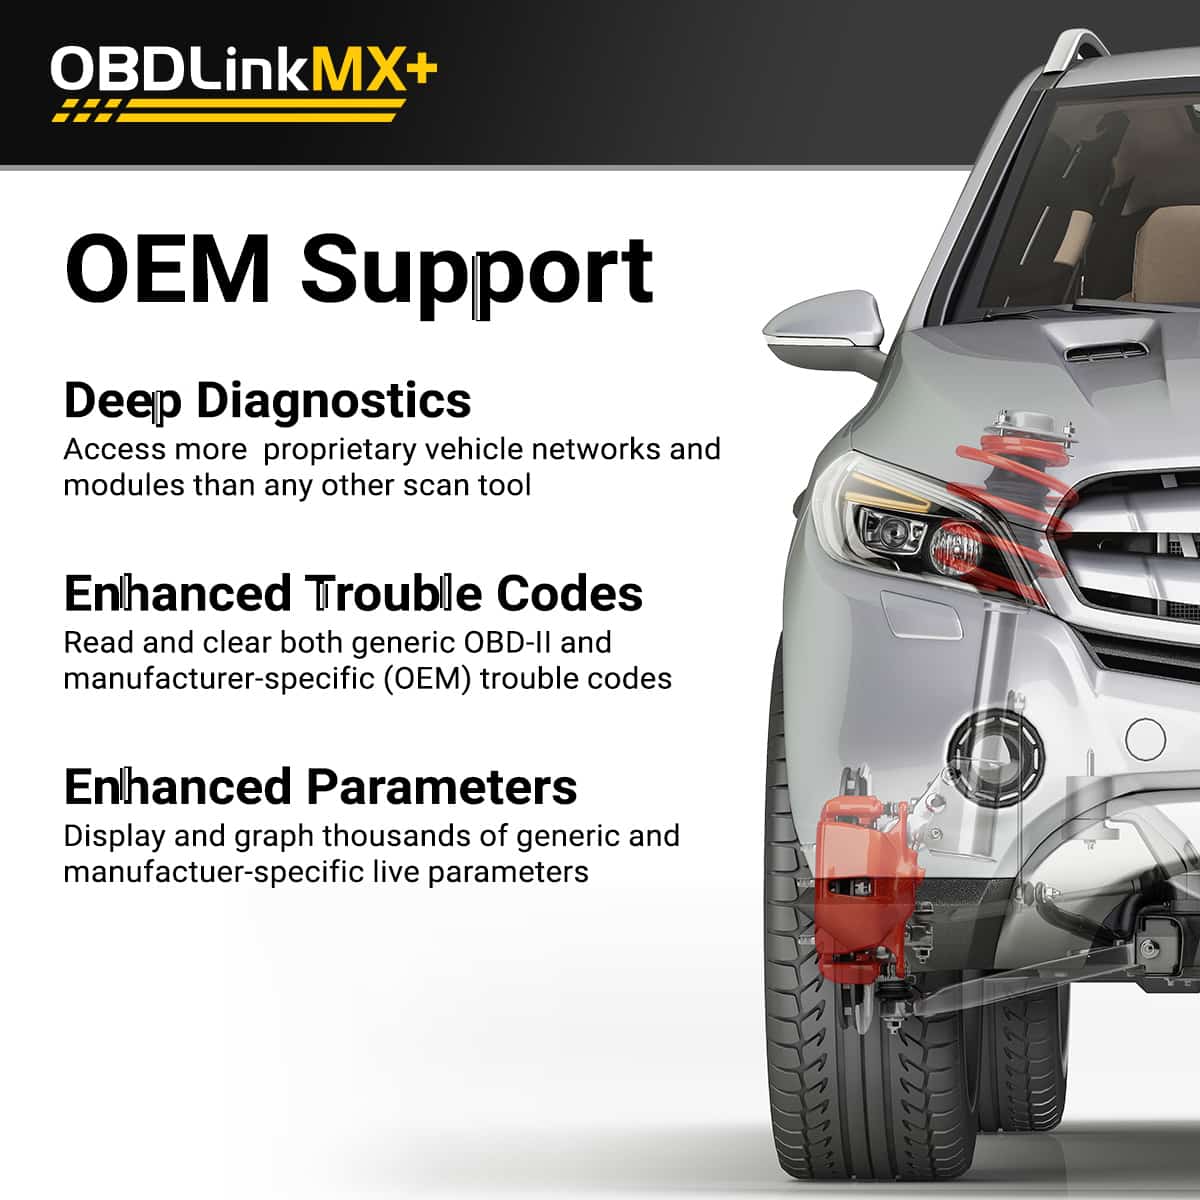 obdlink mx+ oem support